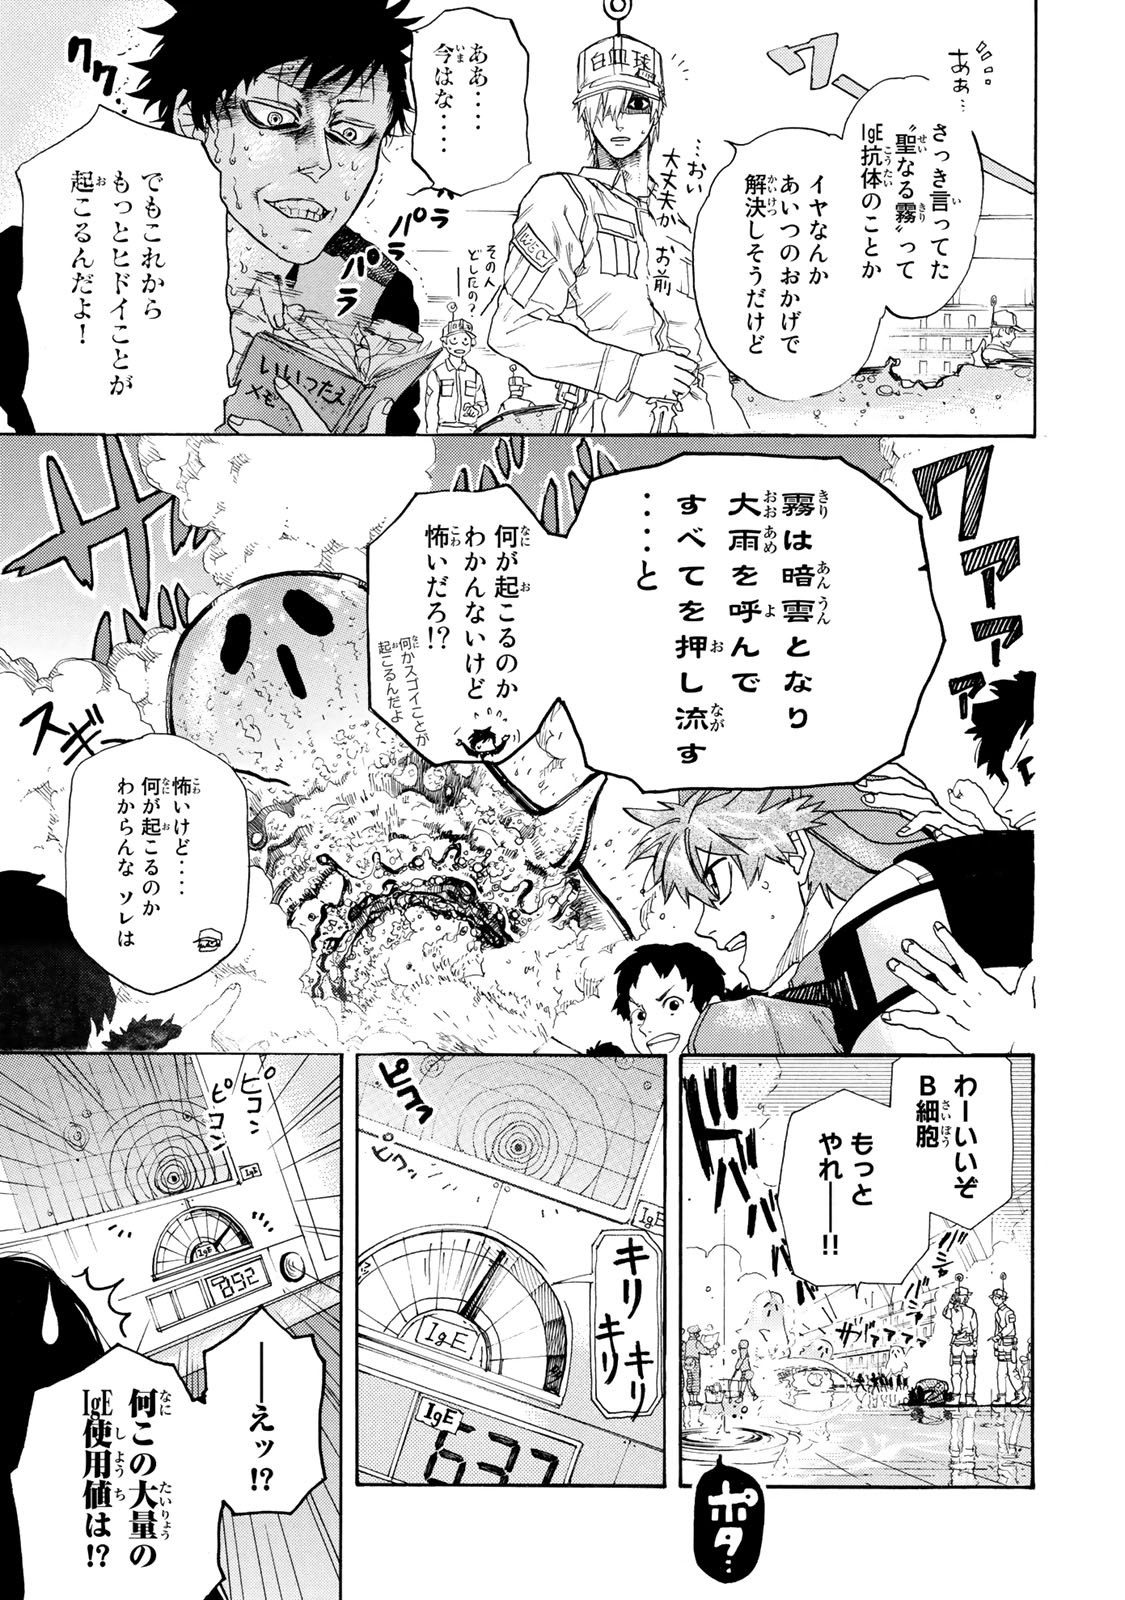 Hataraku Saibou - Chapter 2 - Page 17